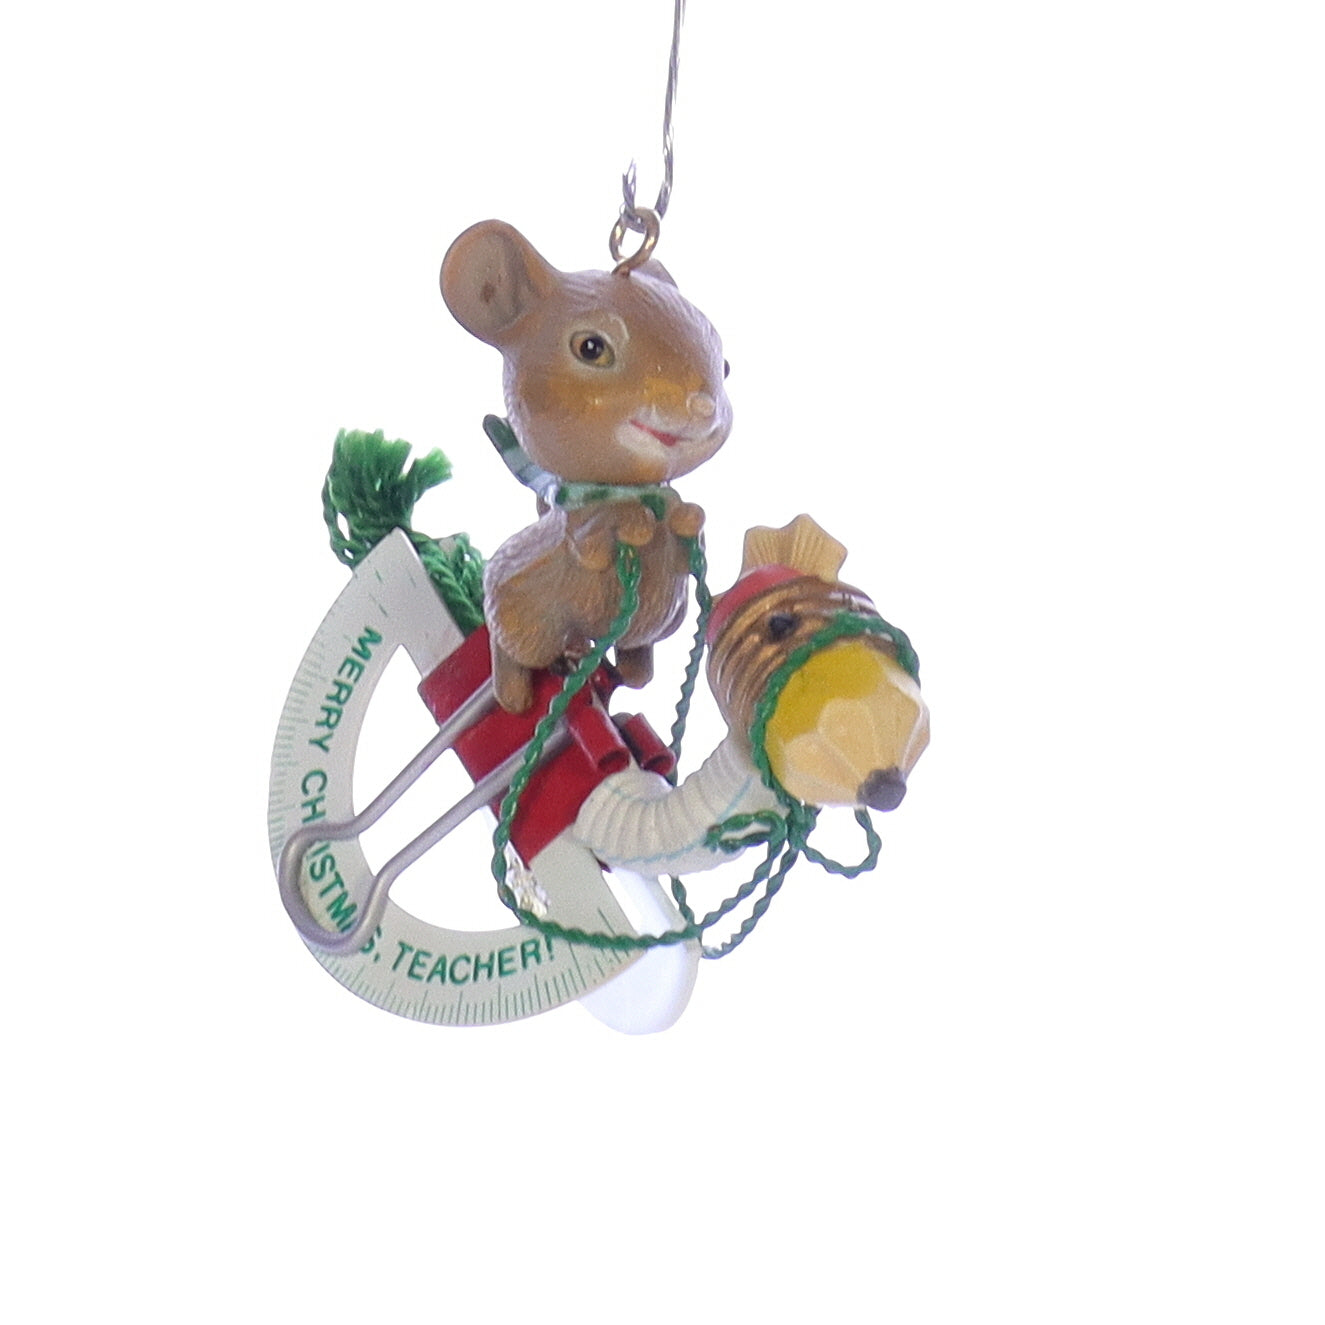 Enesco Treasury of Christmas Ornaments Vintage Artplas Mouse Figurine 830054 2.5"